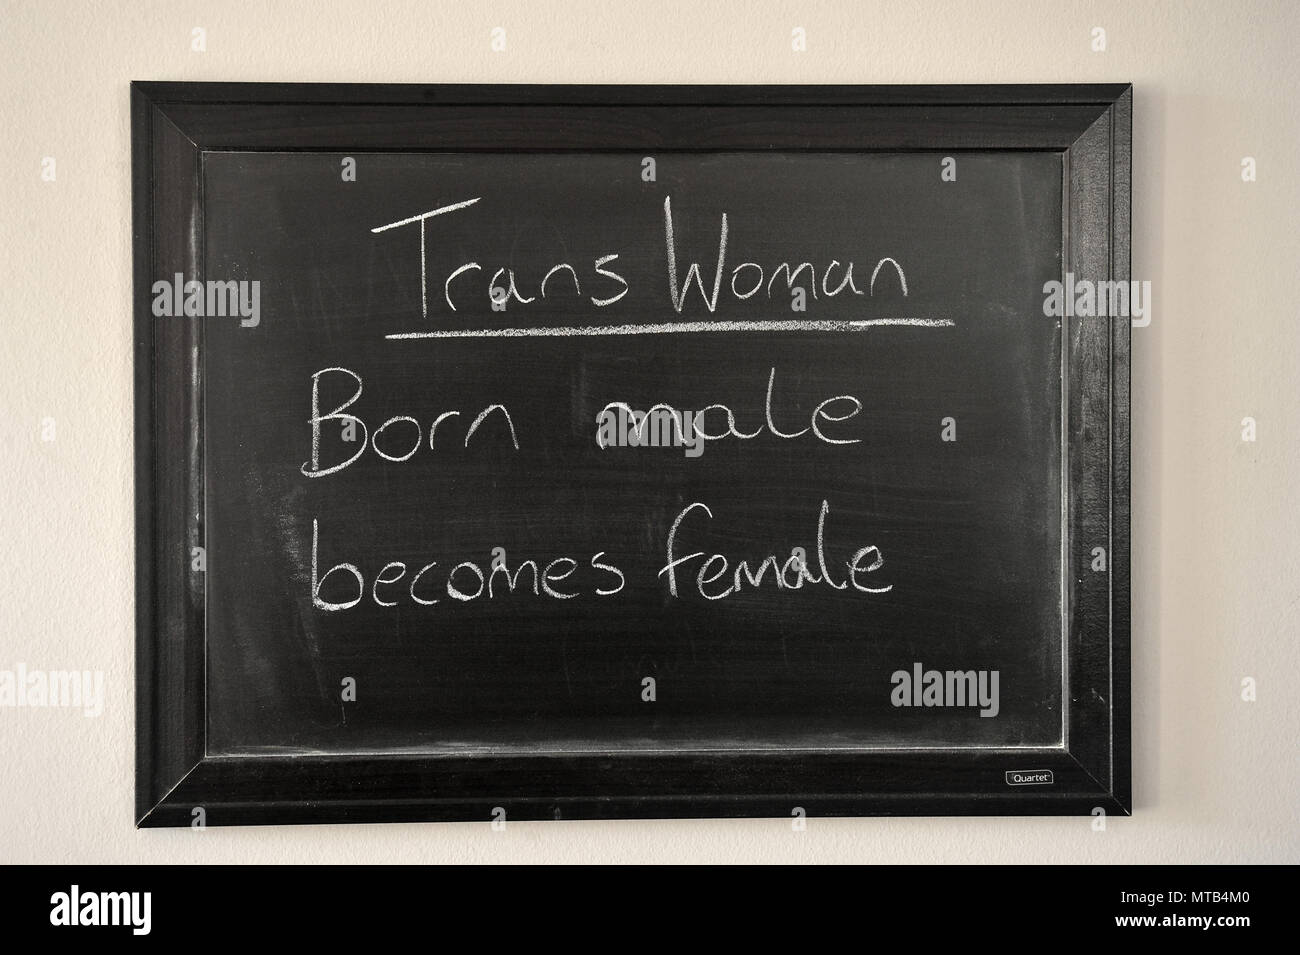 Trans woman definition written in a white chalk on a wall mounted blackboard Stock Photo